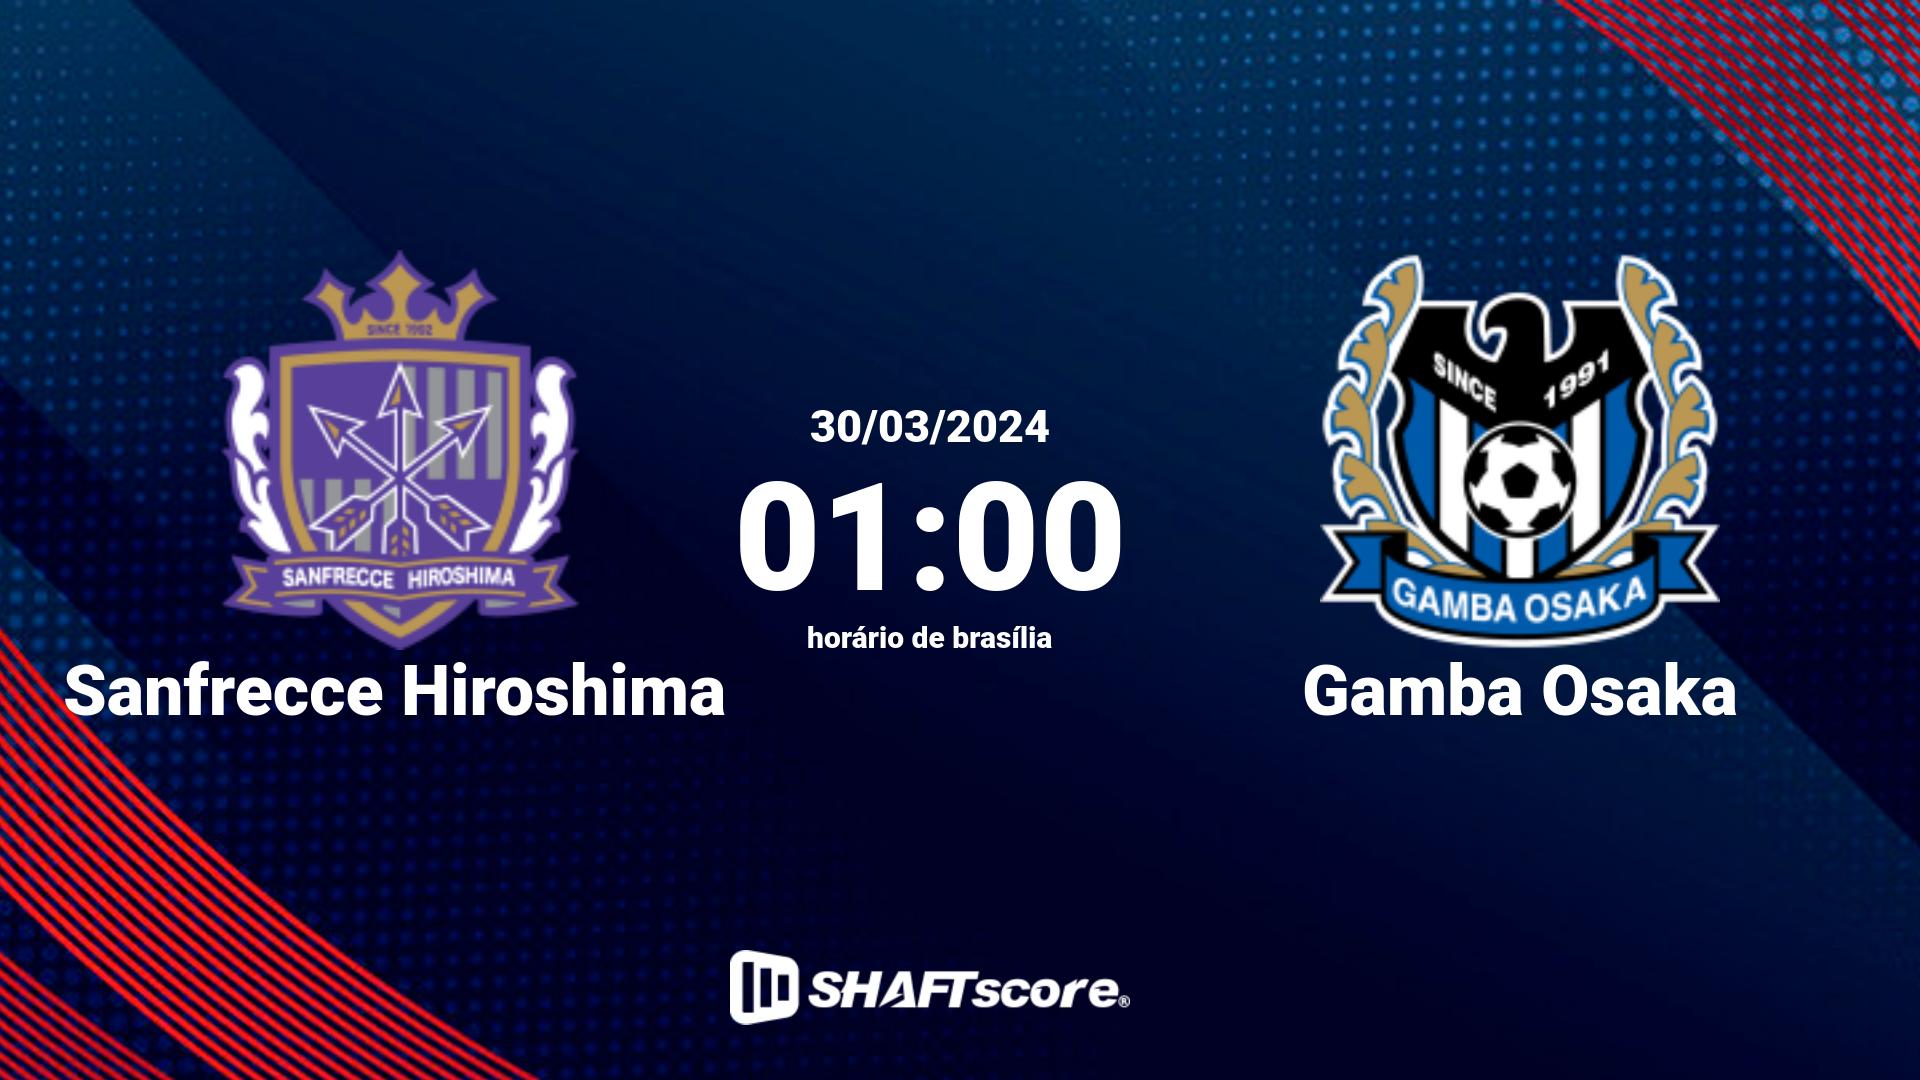 Estatísticas do jogo Sanfrecce Hiroshima vs Gamba Osaka 30.03 01:00